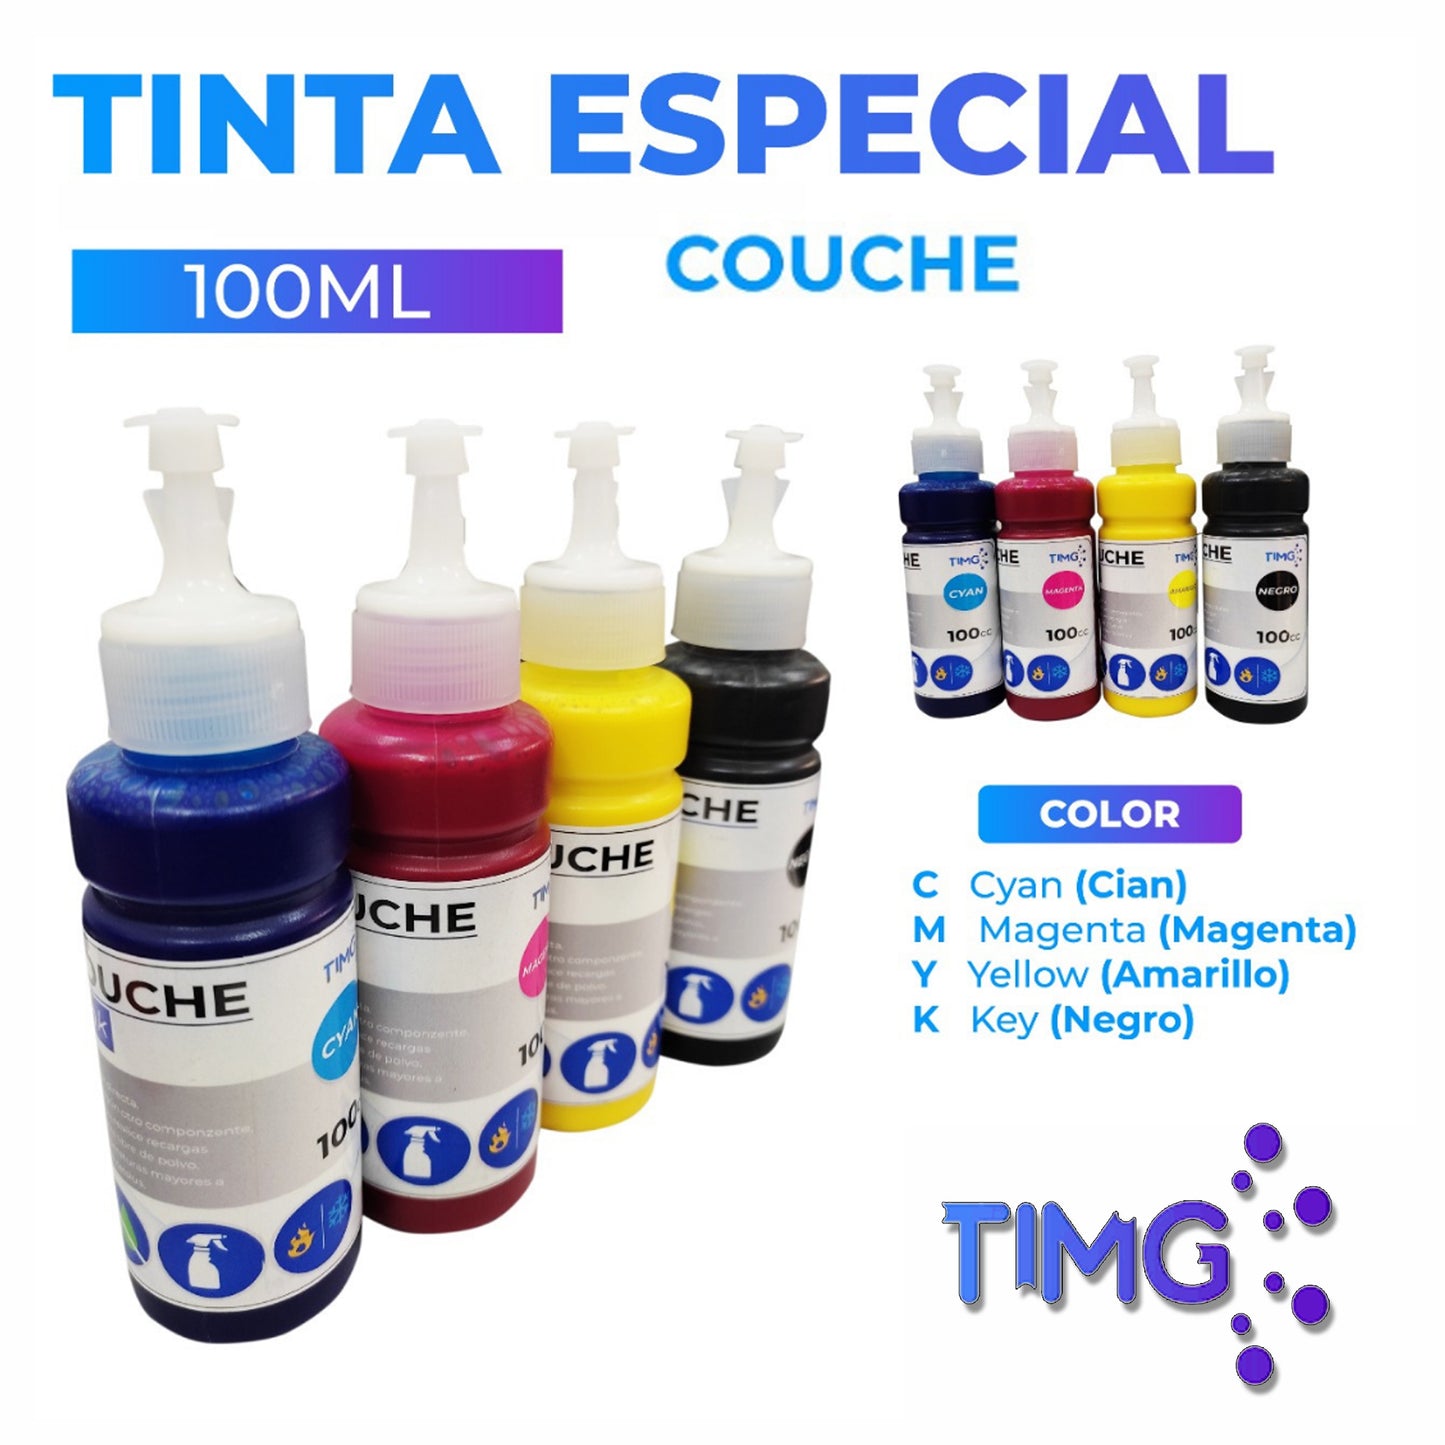 Tinta especial couche - 100 ml  - serie tmj